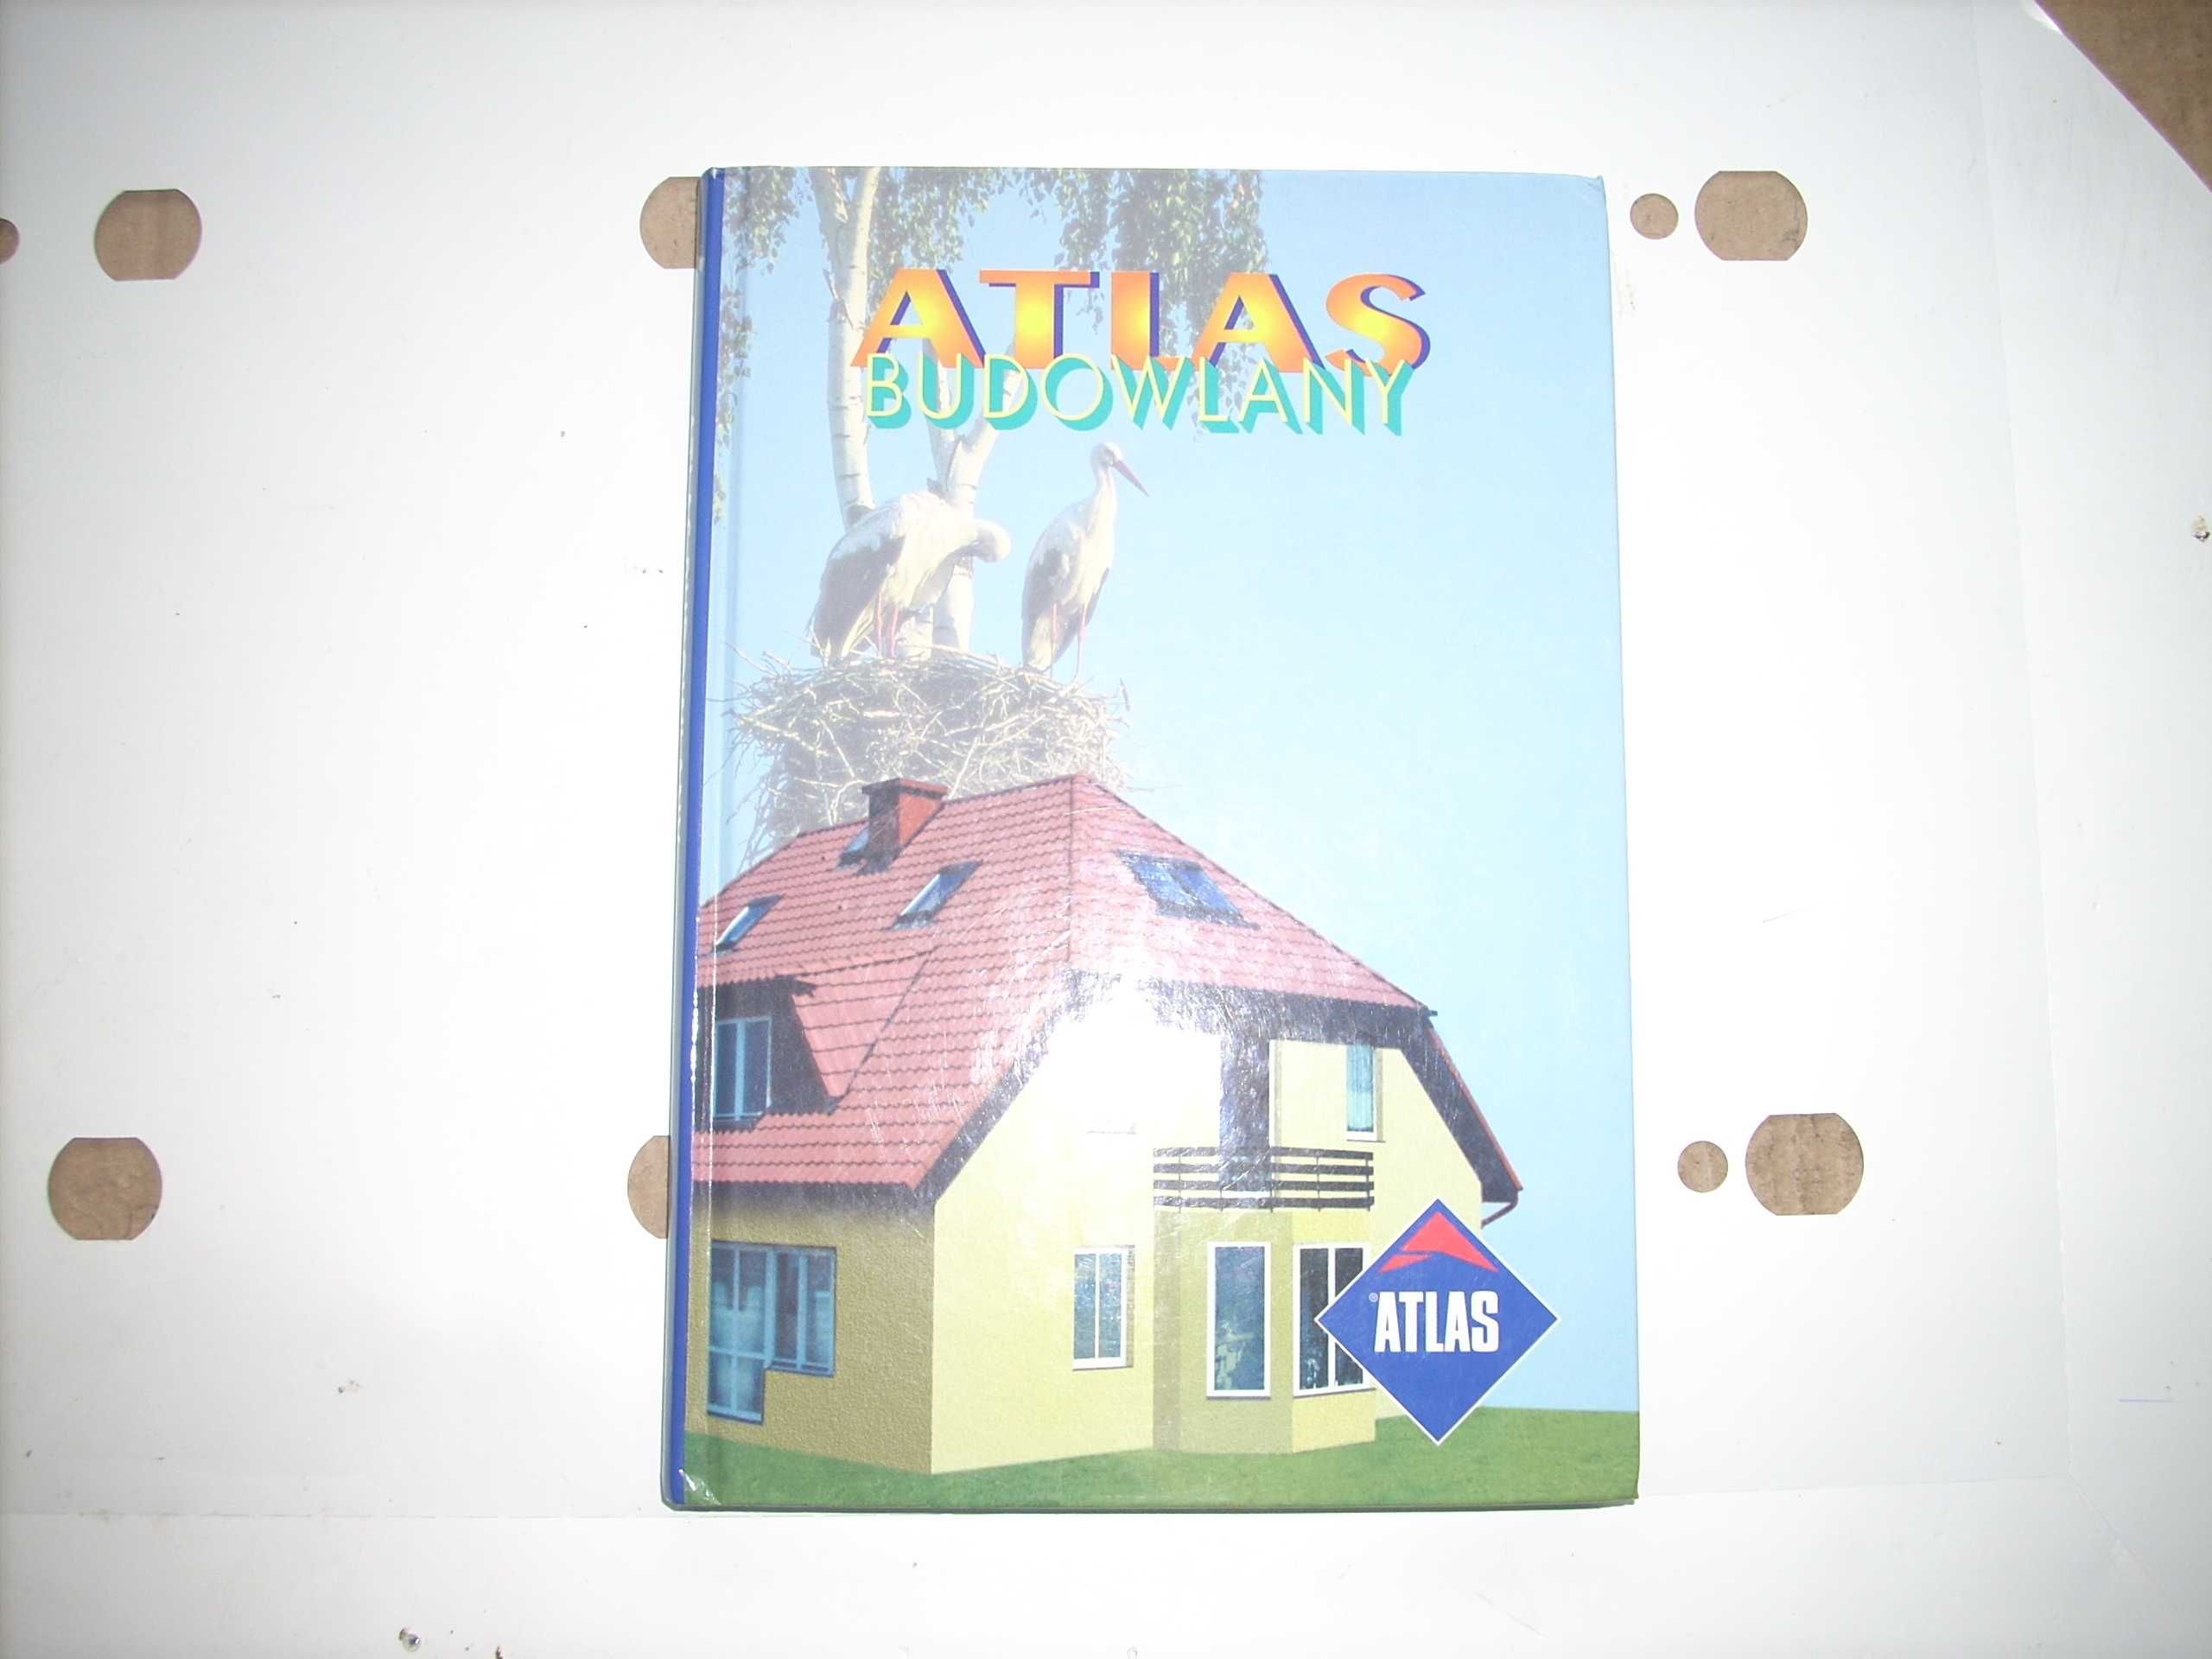 Atlas Budowlany książka o systemach budownictwa